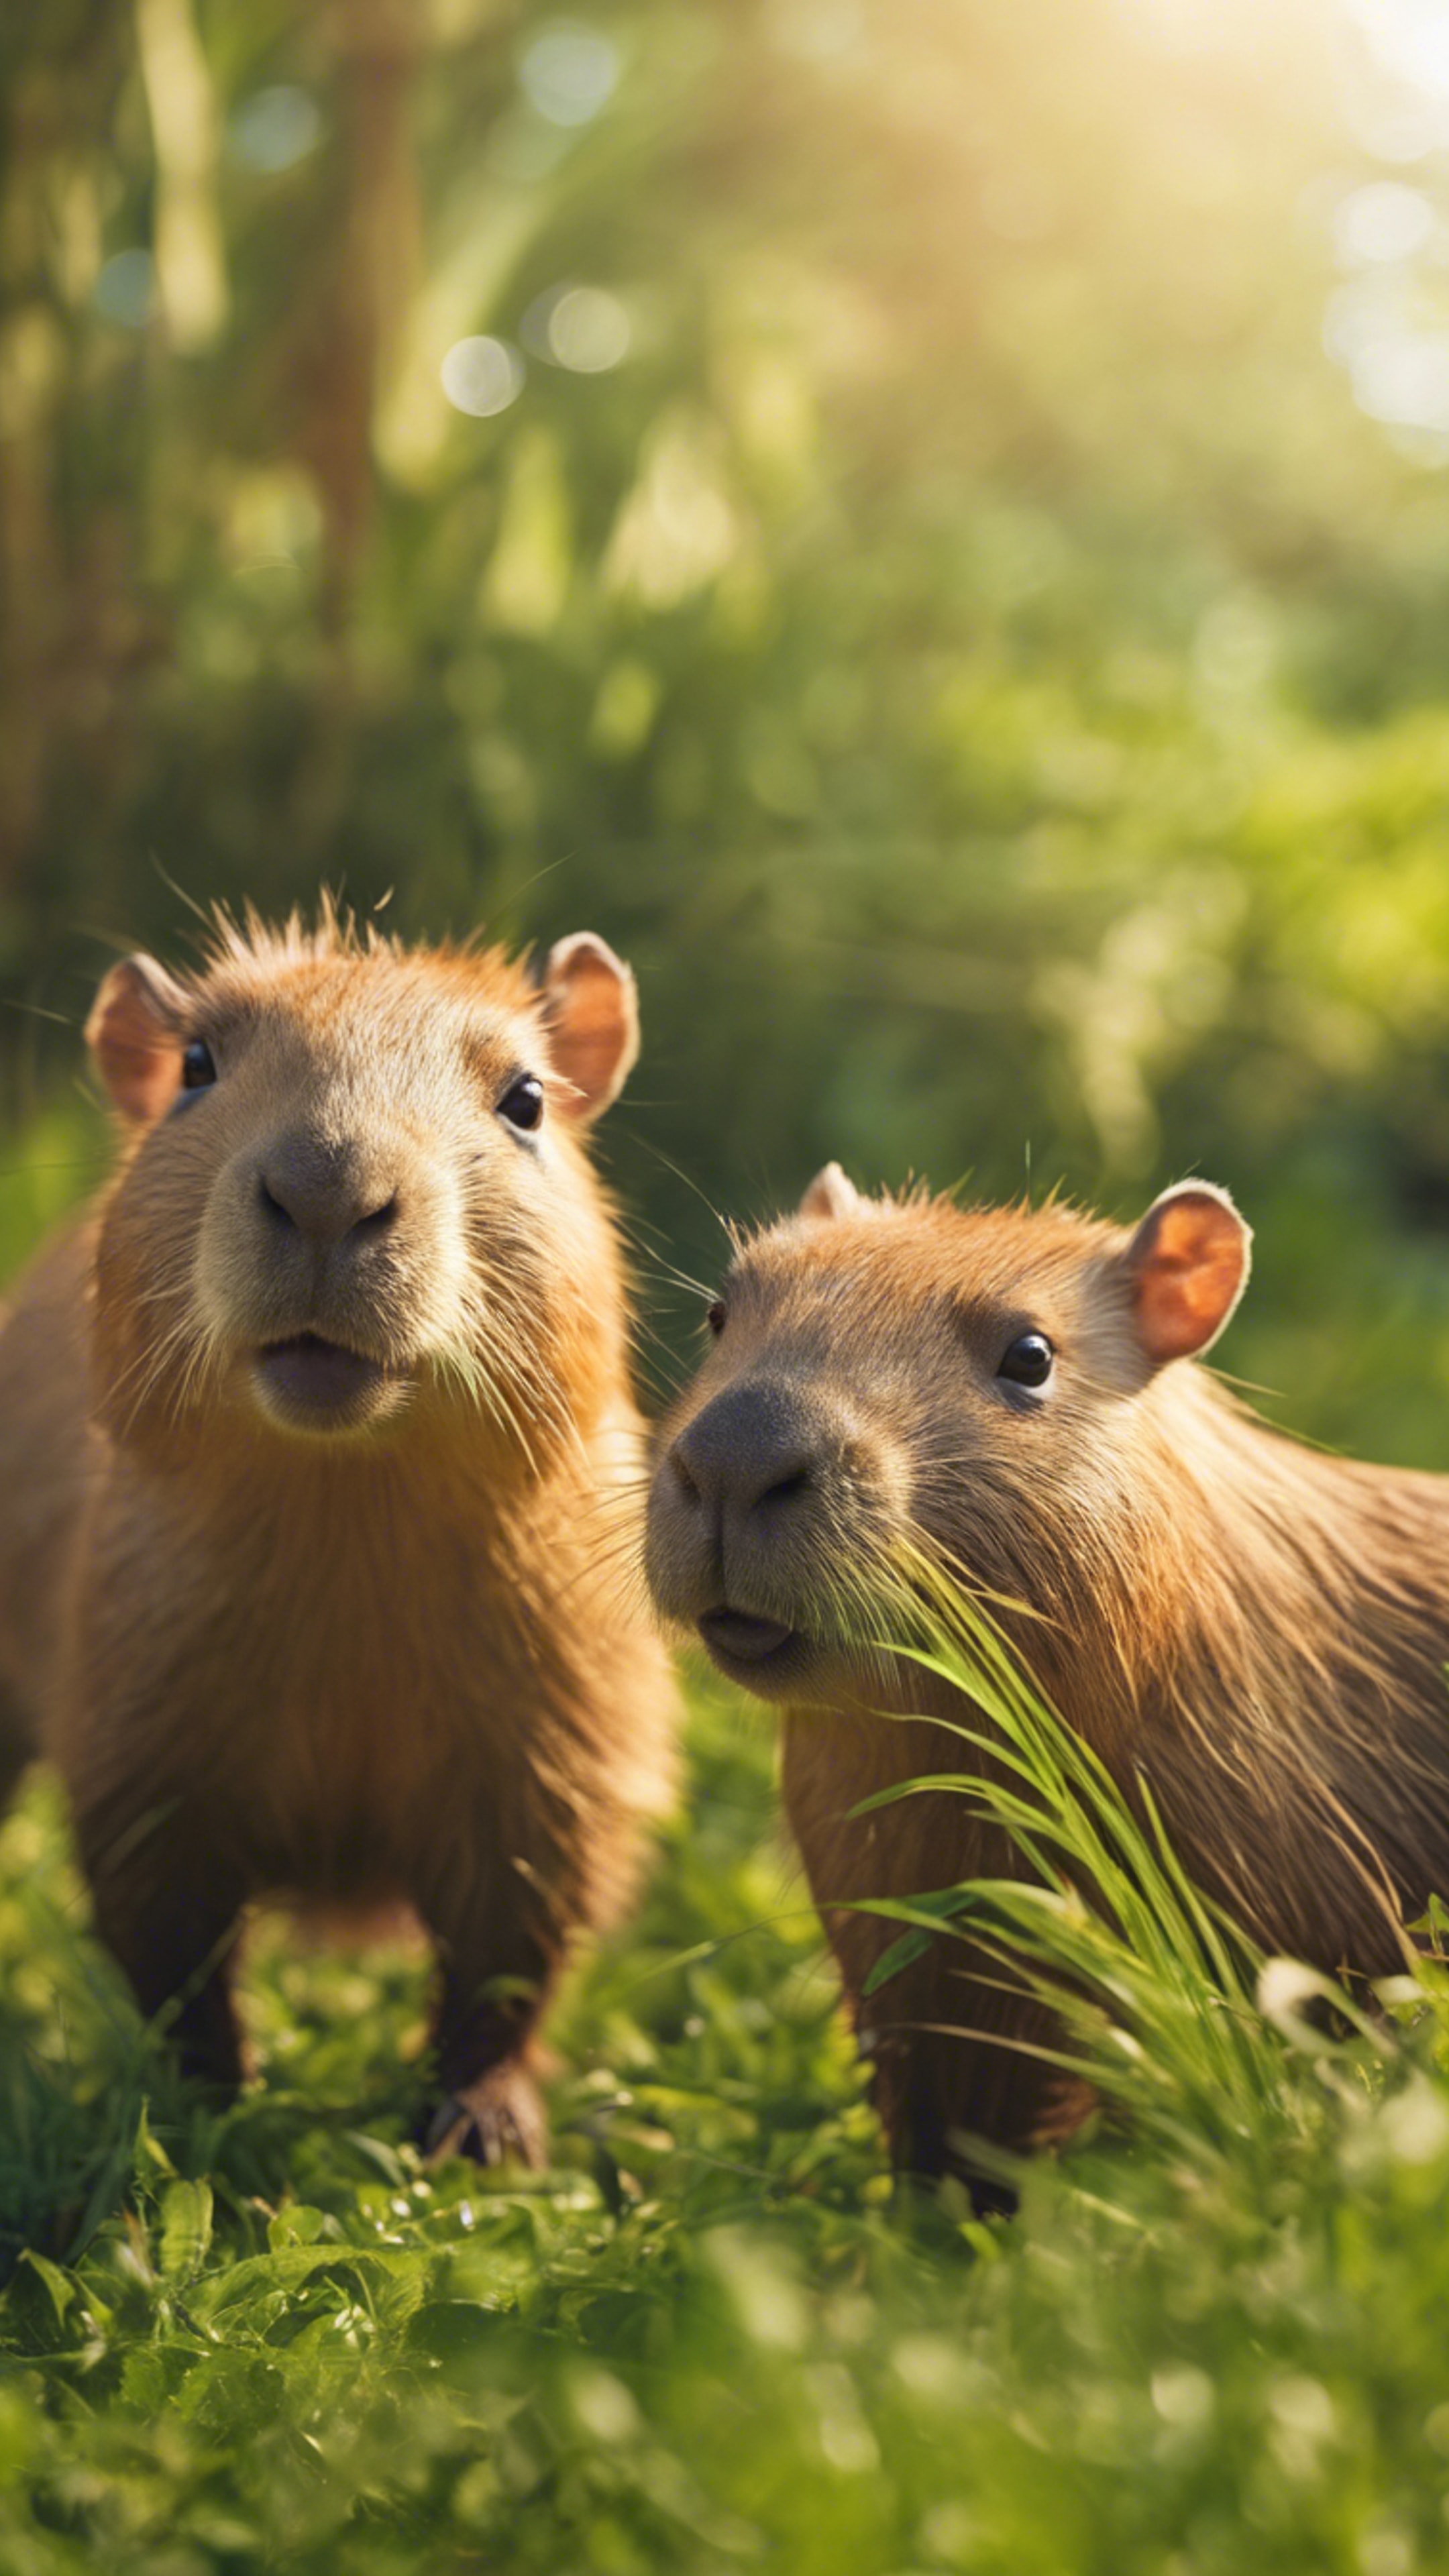 A group of playful capybara kids in a lush green meadow under the warm sunlight. 牆紙[941f99d4da544970bae4]